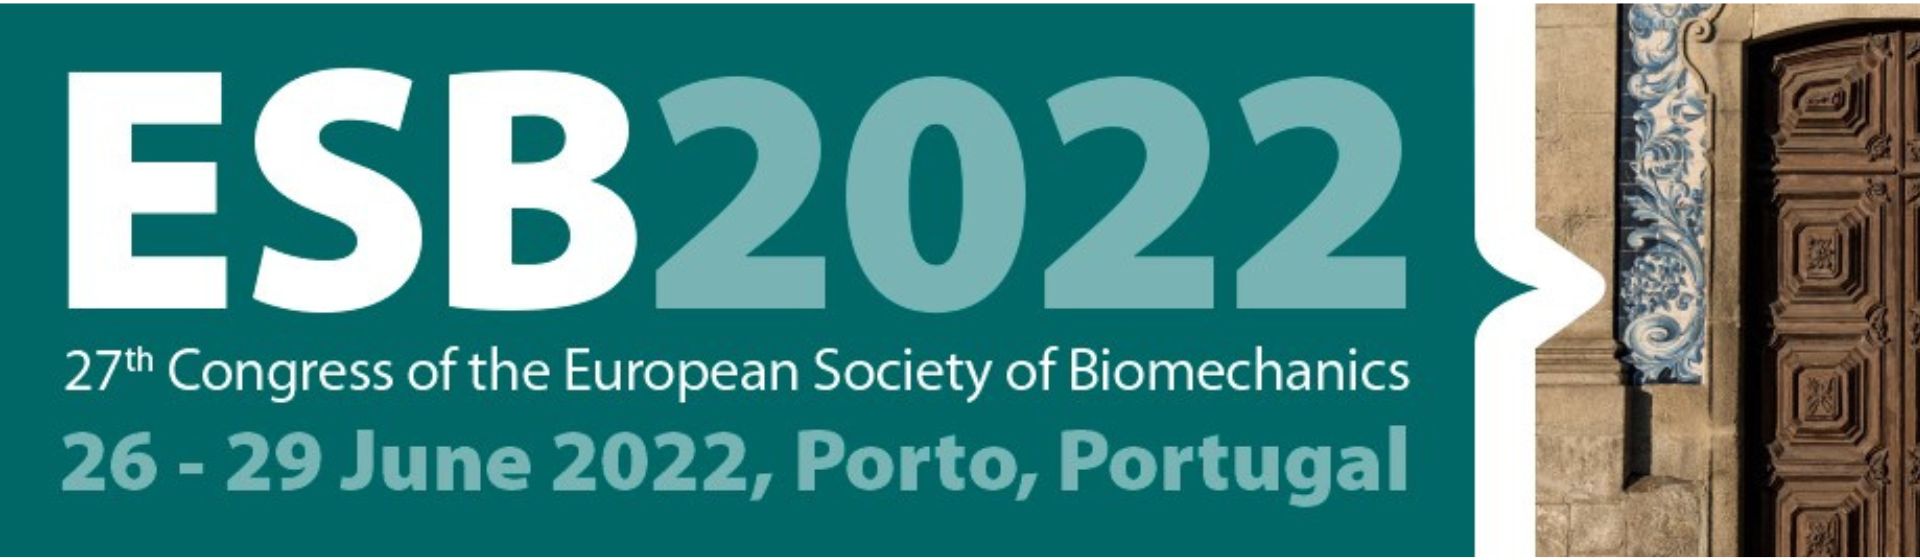 congress of the european society of biomechanics